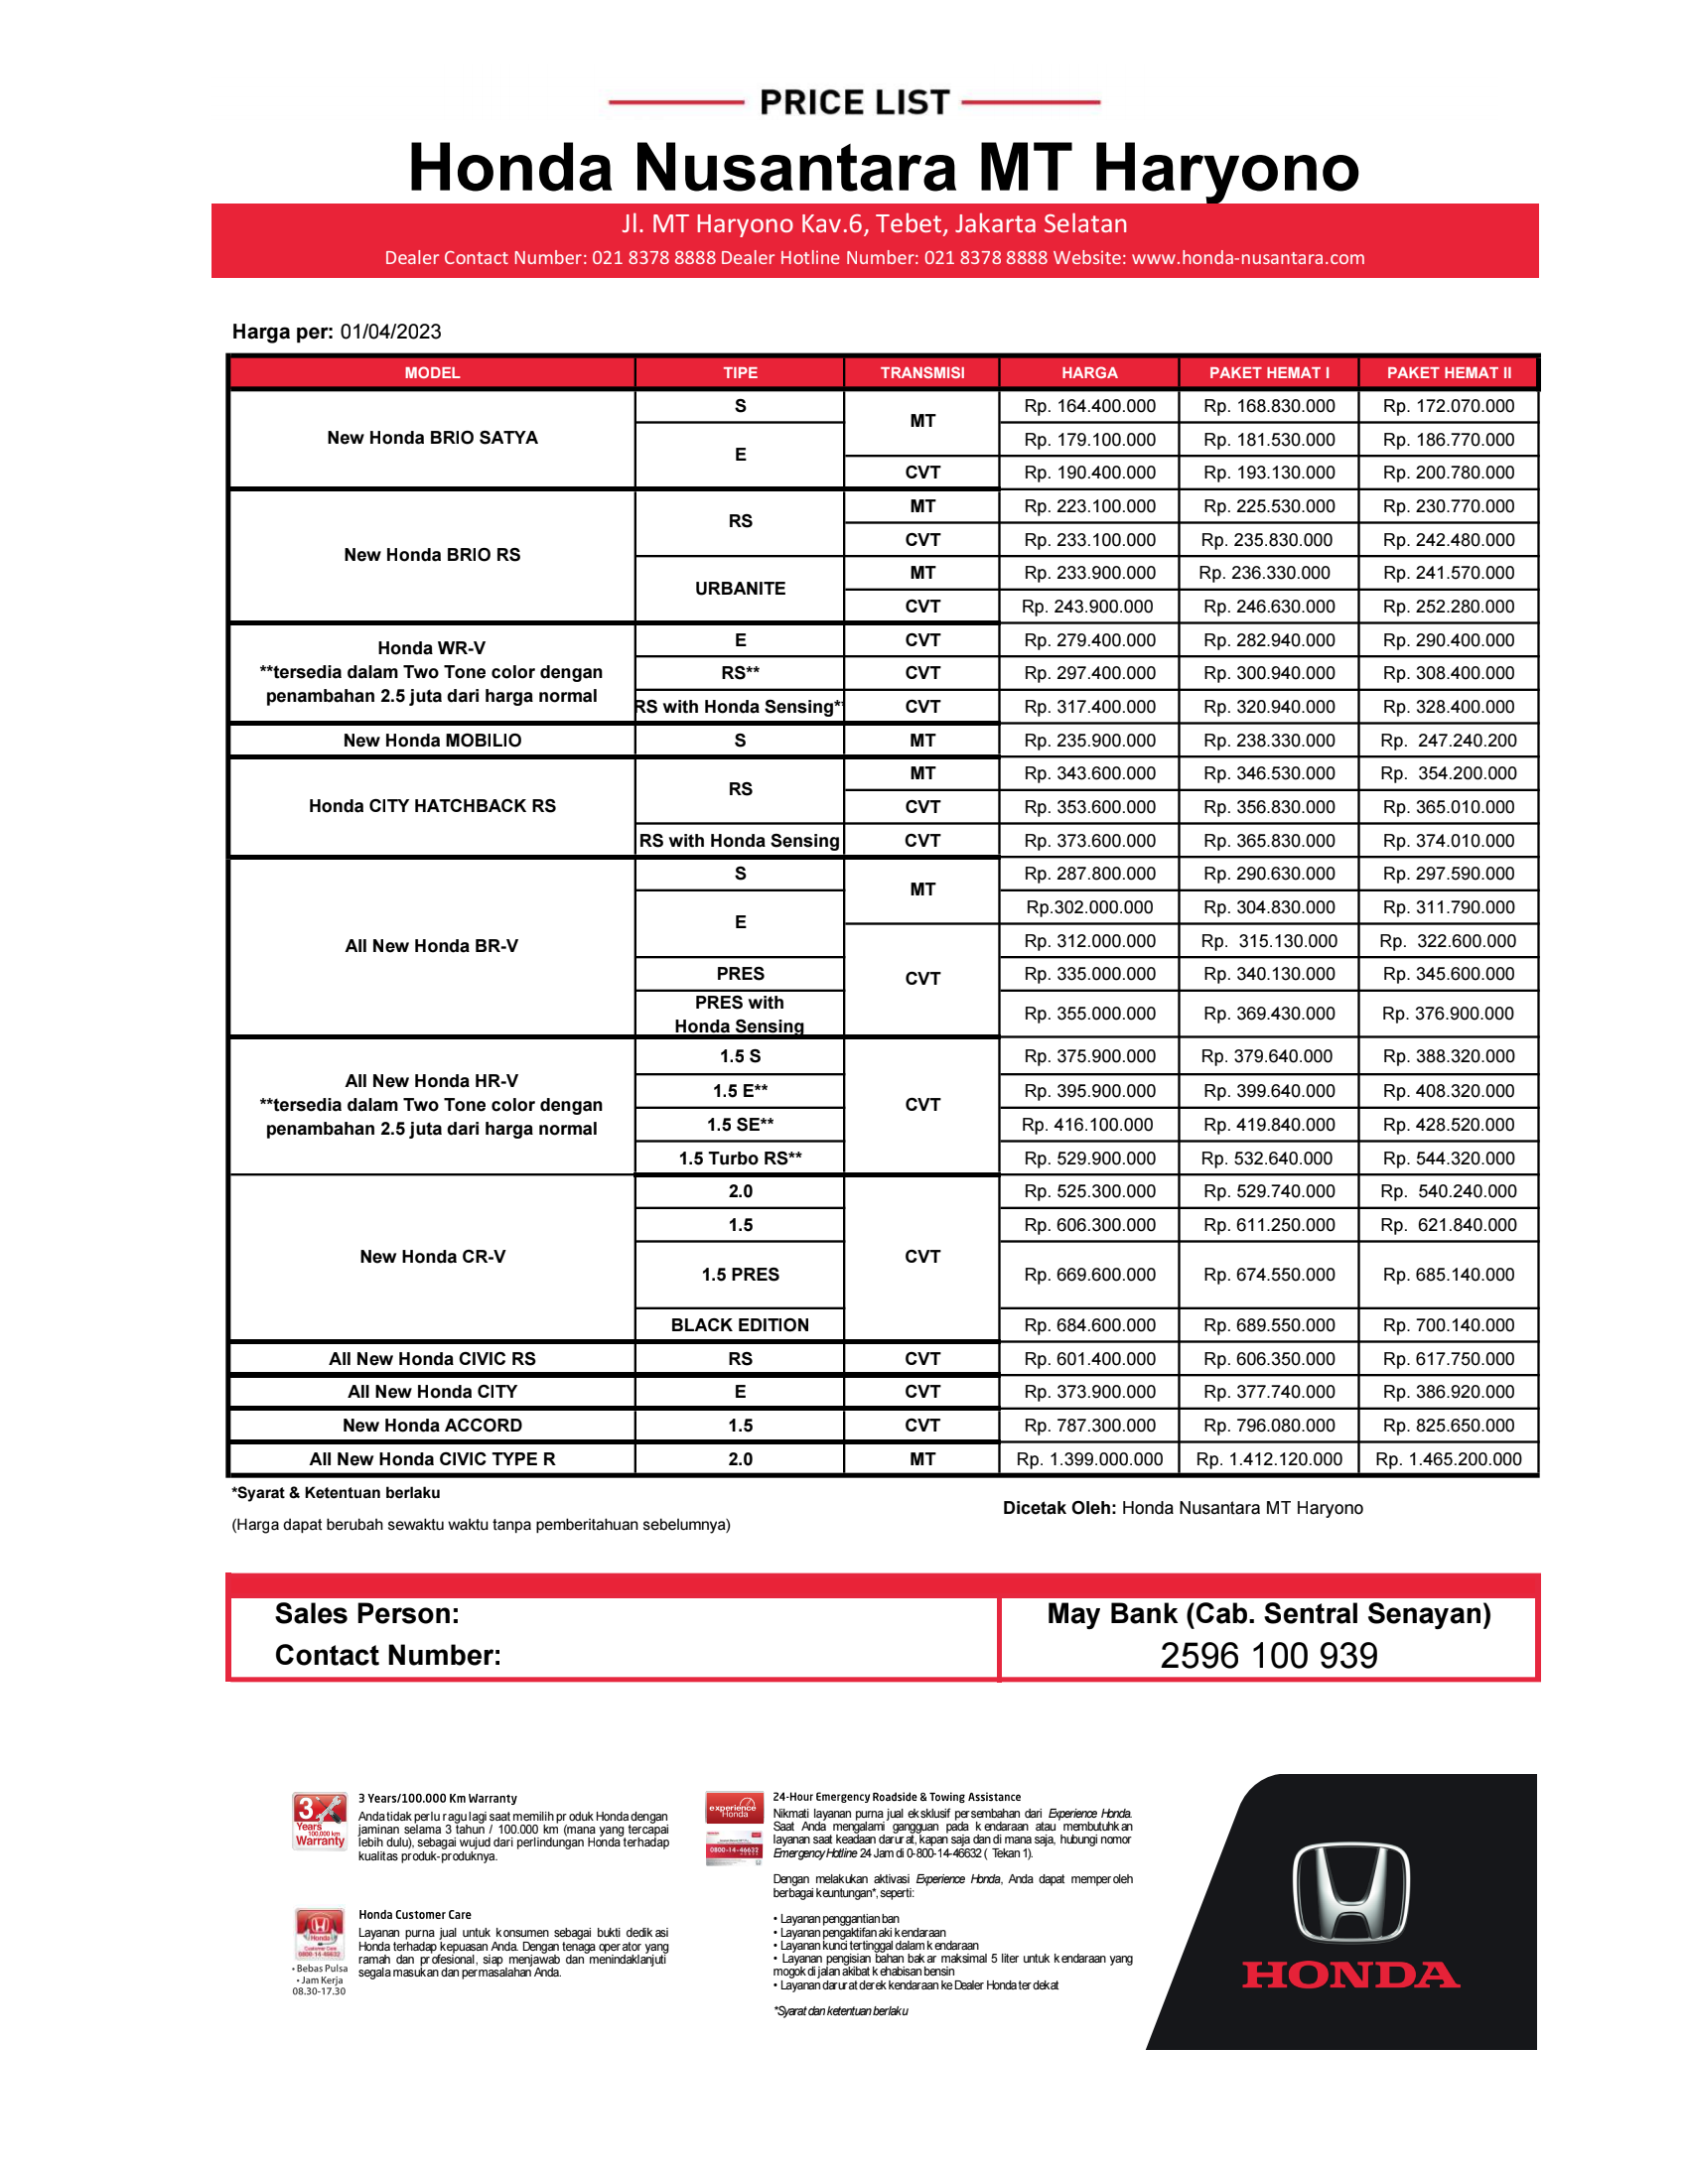 Harga Jakarta Selatan Pricelist Harga Honda Jakarta Selatan 2023